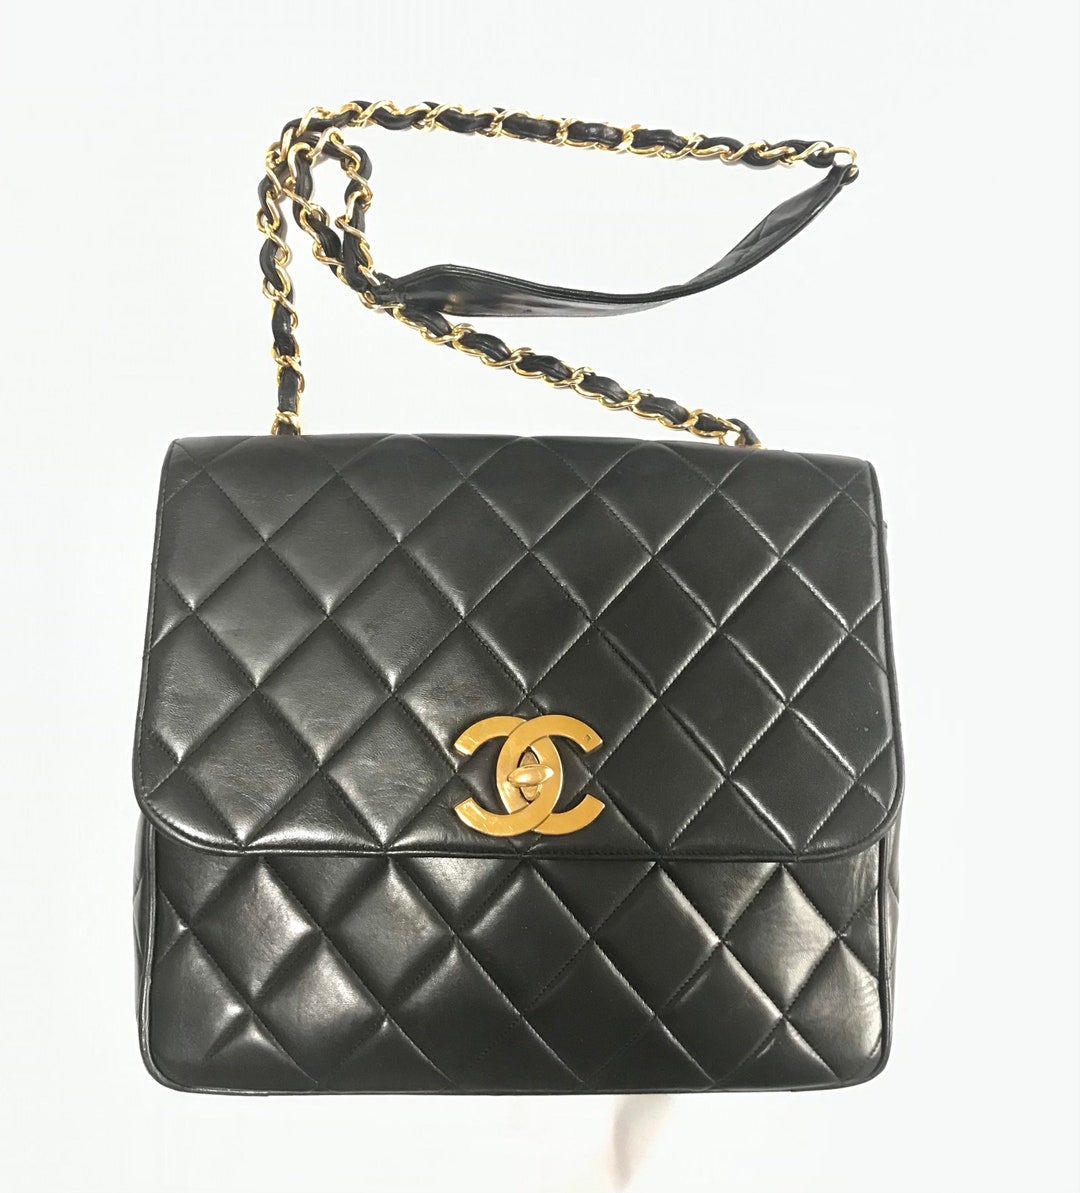 Chanel 2.55 patent leather - Gem